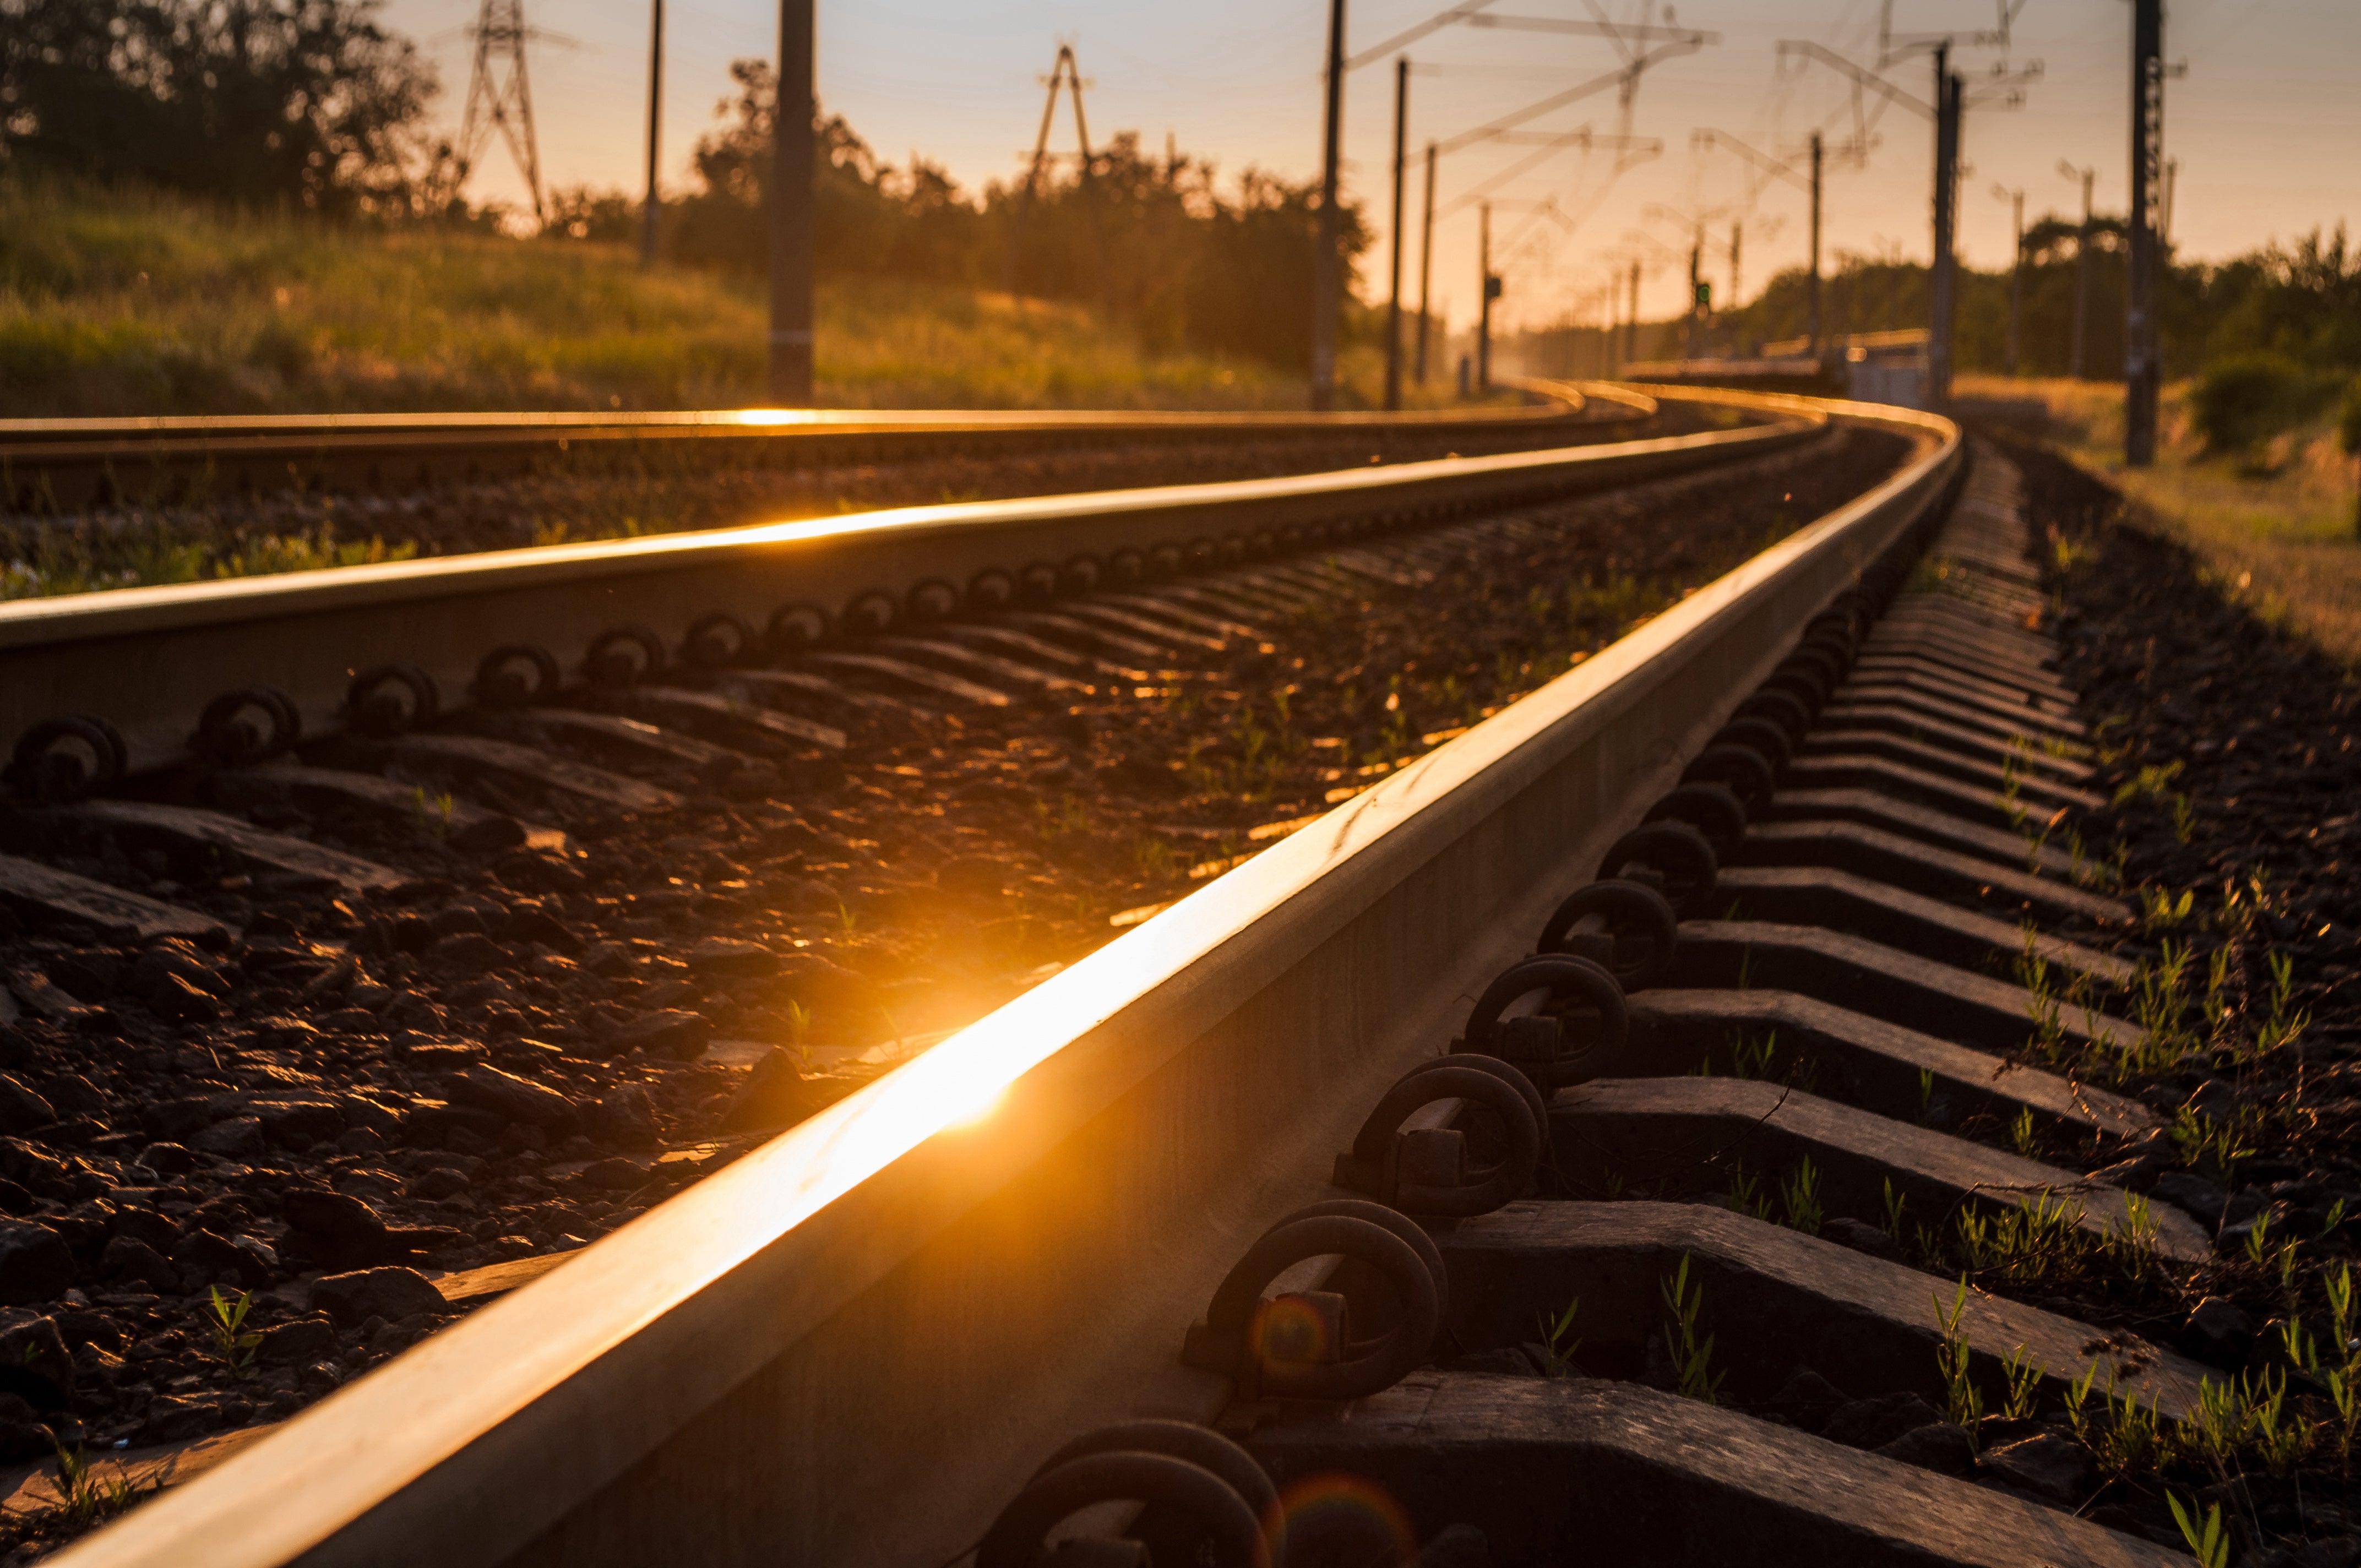 Sun reflecting in railroad tracks.